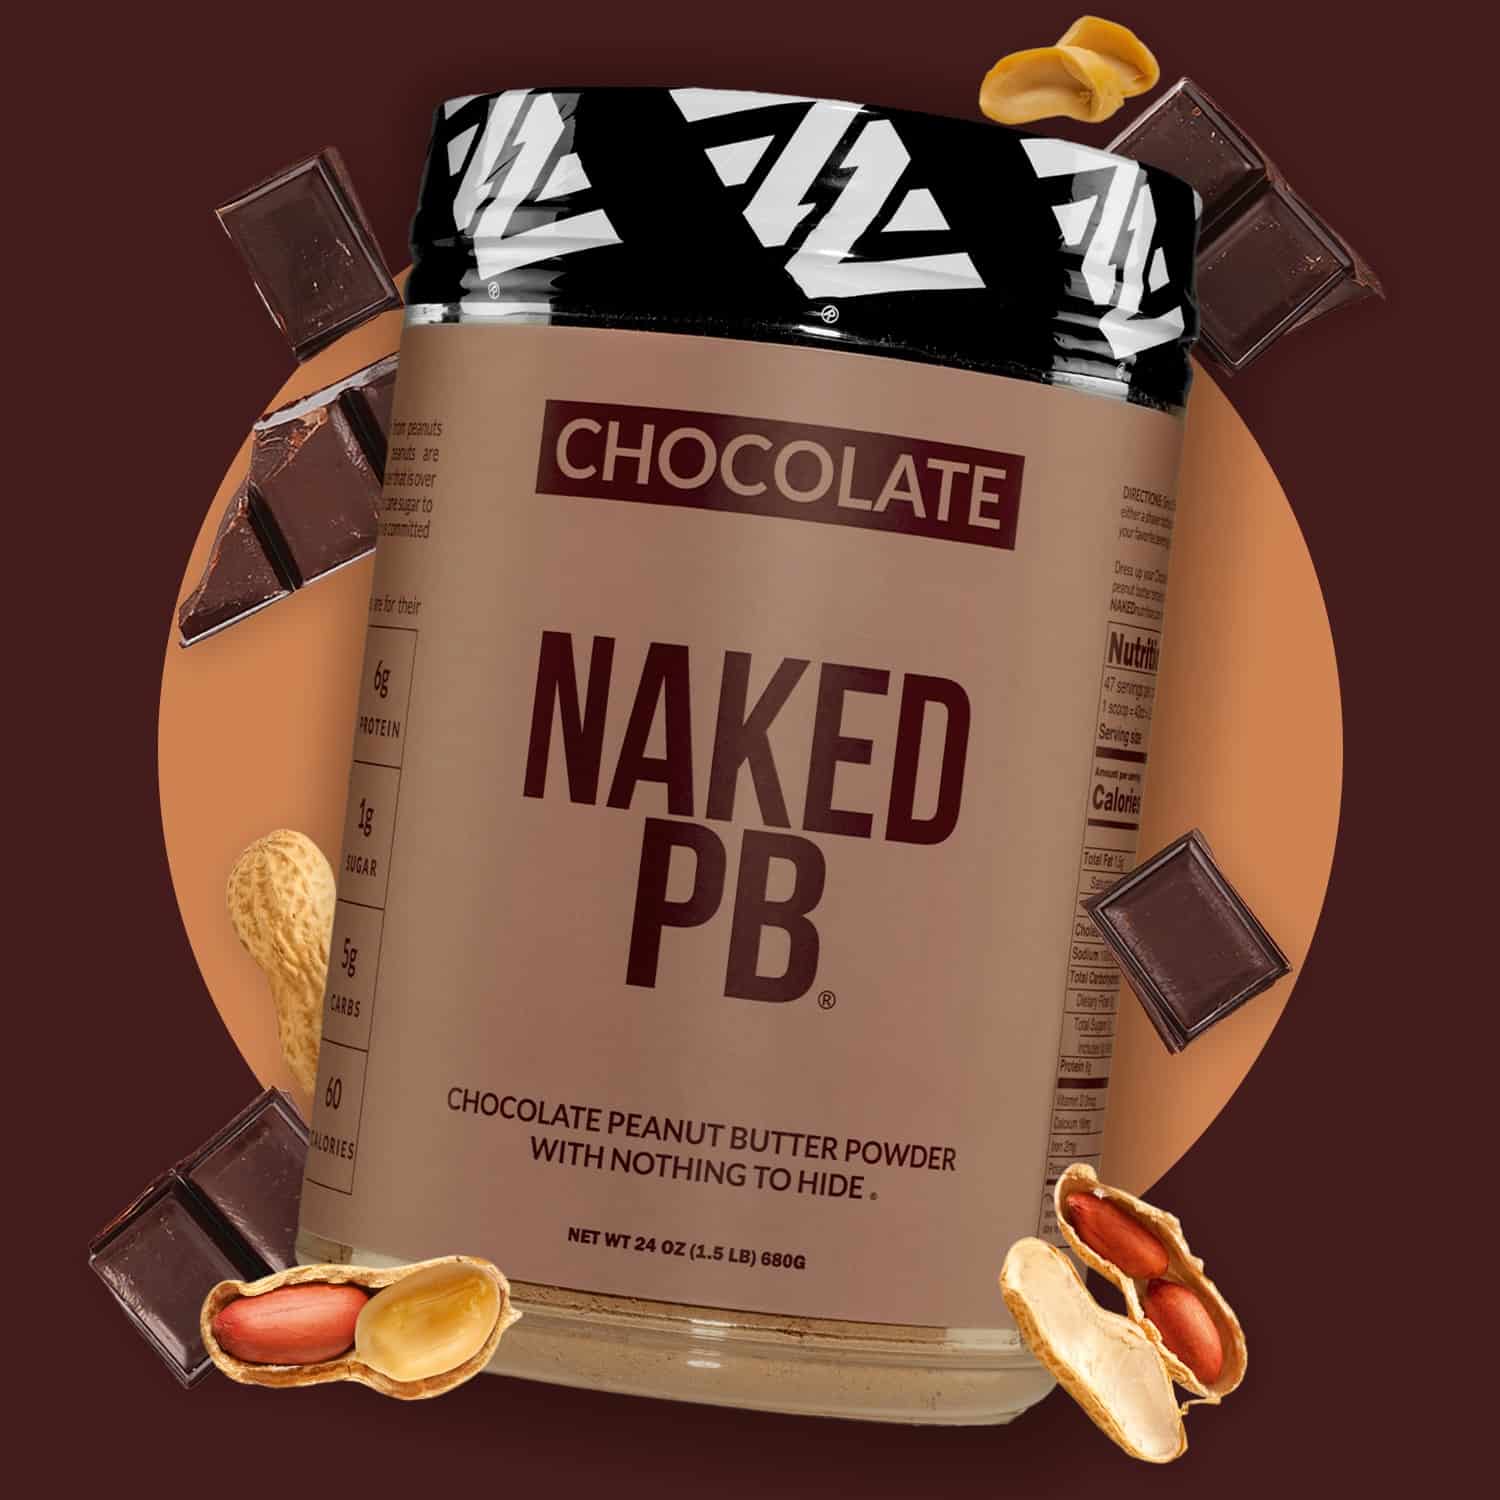 Naked Pb protein powder.